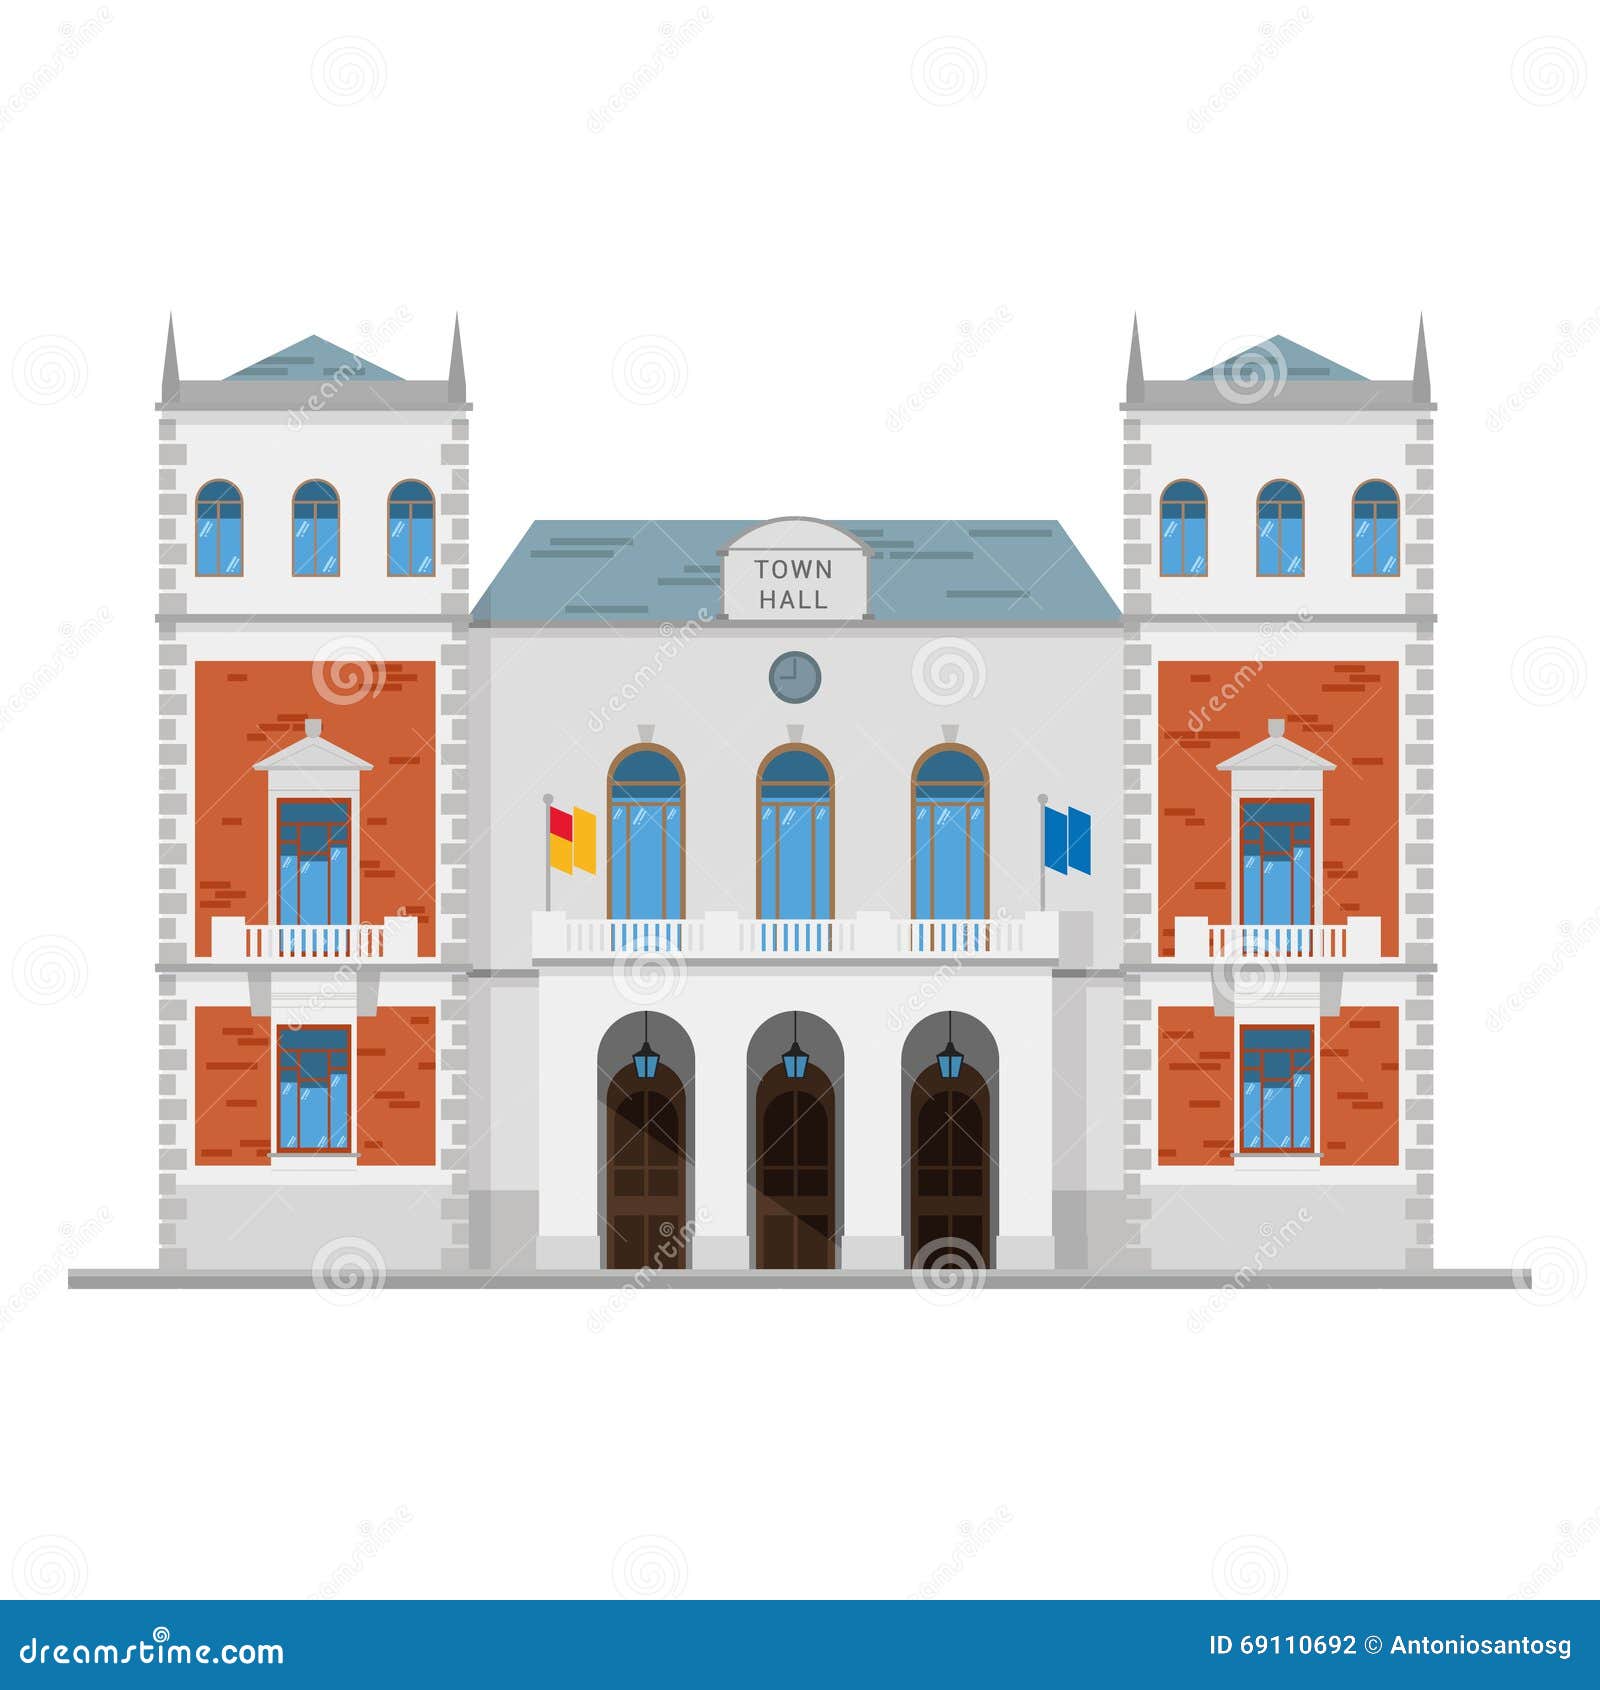 Cute Cartoon Vector Illustration of a Town Hall Stock Vector